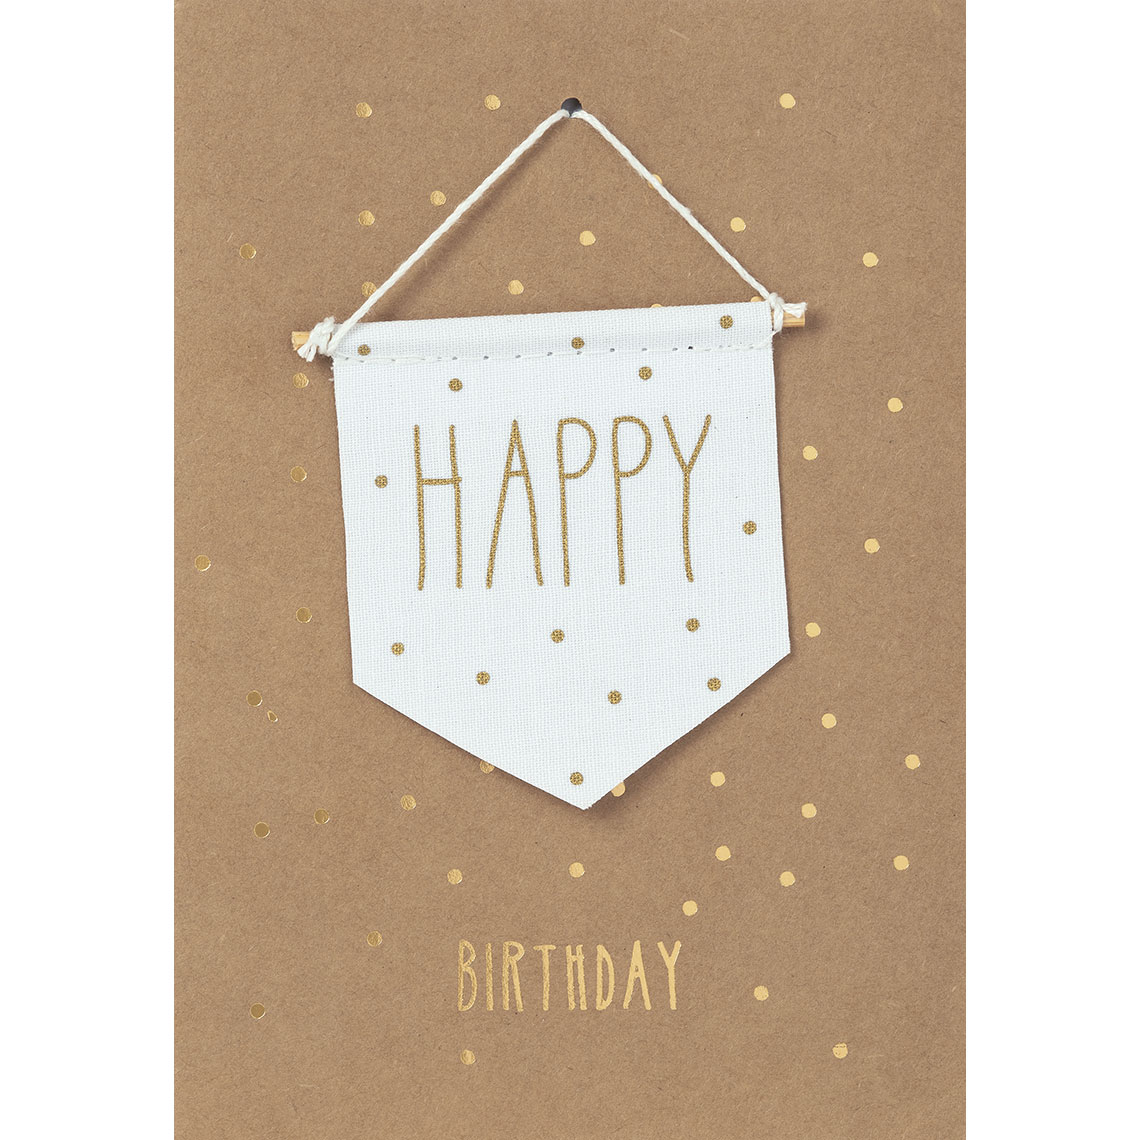 Wimpelkarte "Happy Birthday" 